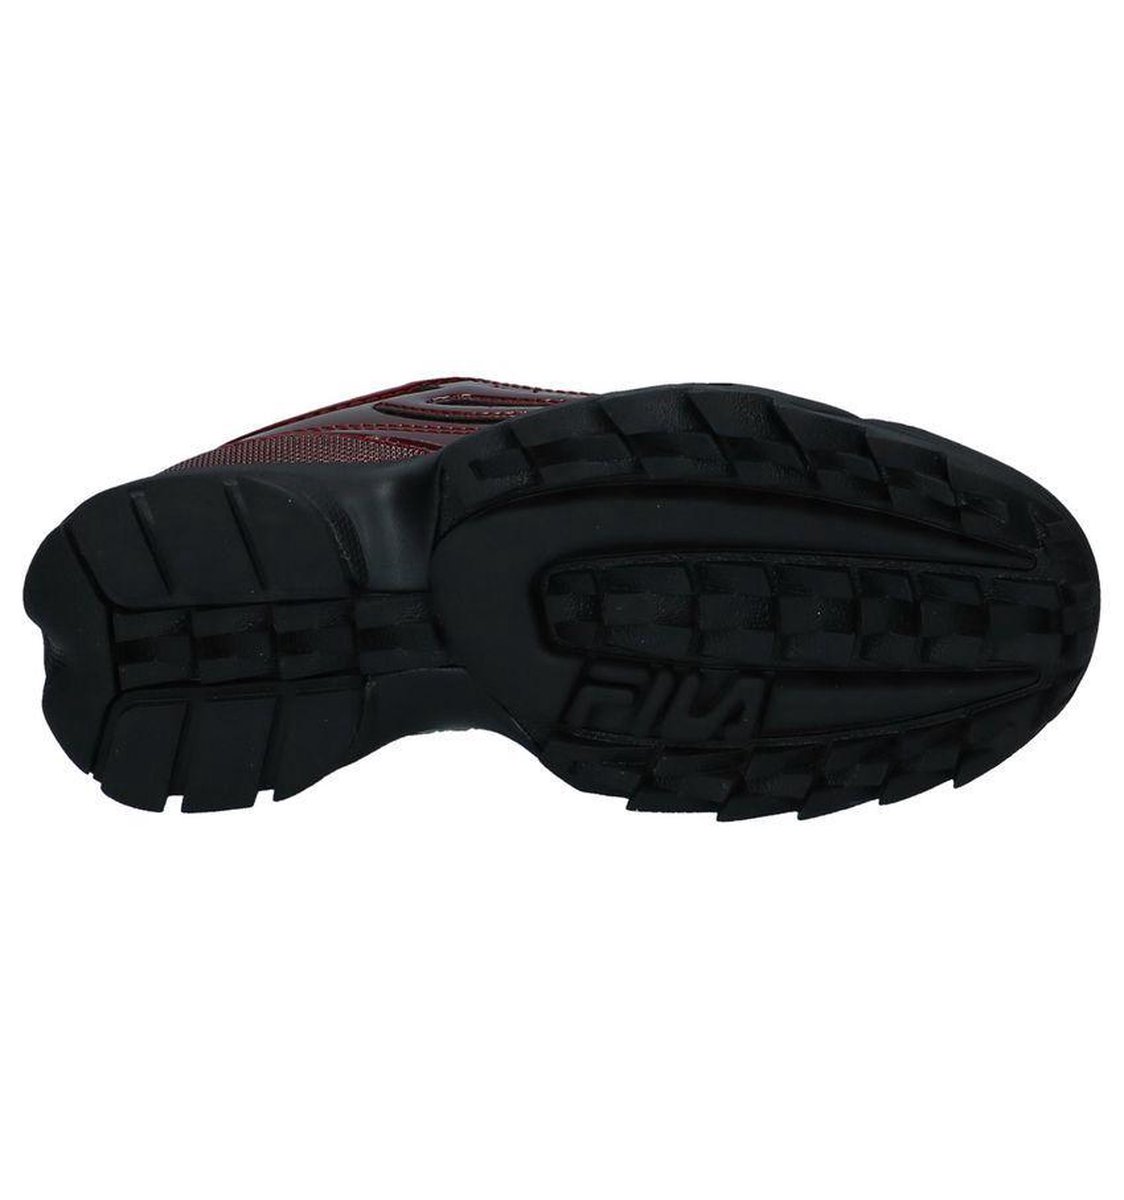 Fila - Disruptor - Sneaker laag gekleed - Dames - Maat 38 - Bordeaux - 40K  Marsala | bol.com